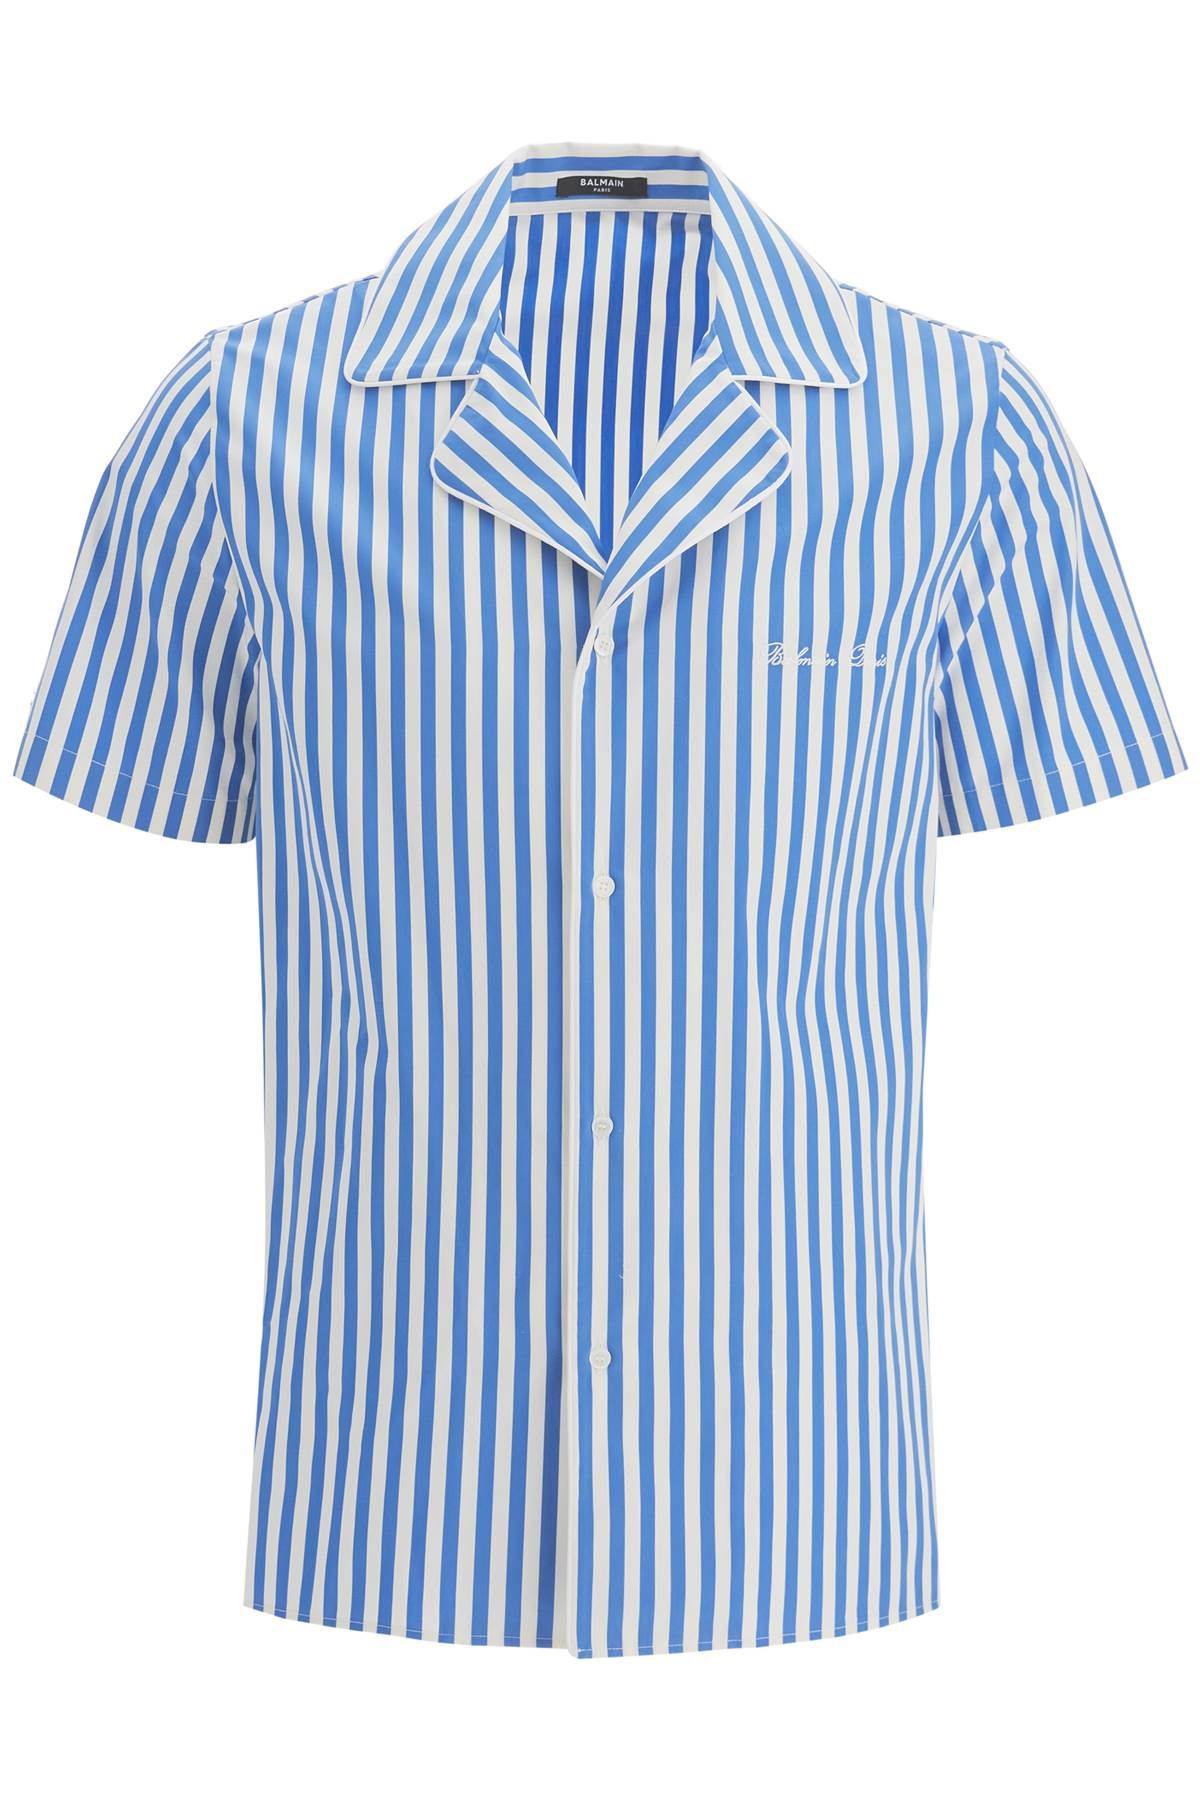 Balmain BALMAIN striped pajama shirt for